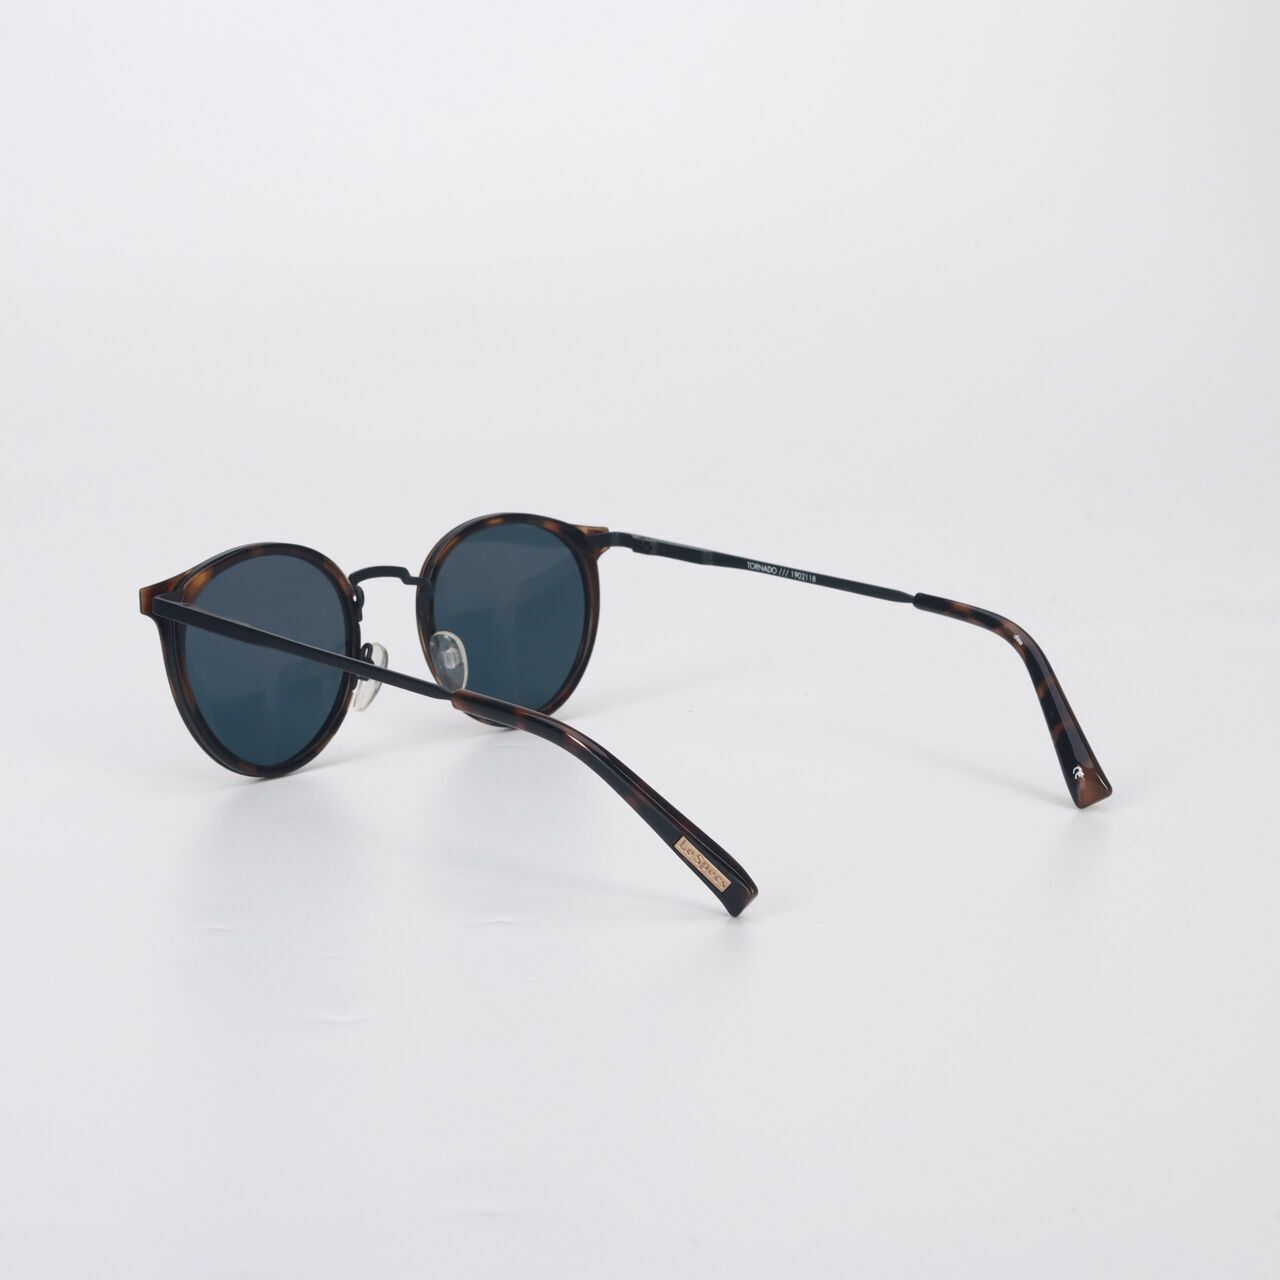 Le Specs Tornado Brown & Black Sunglasses